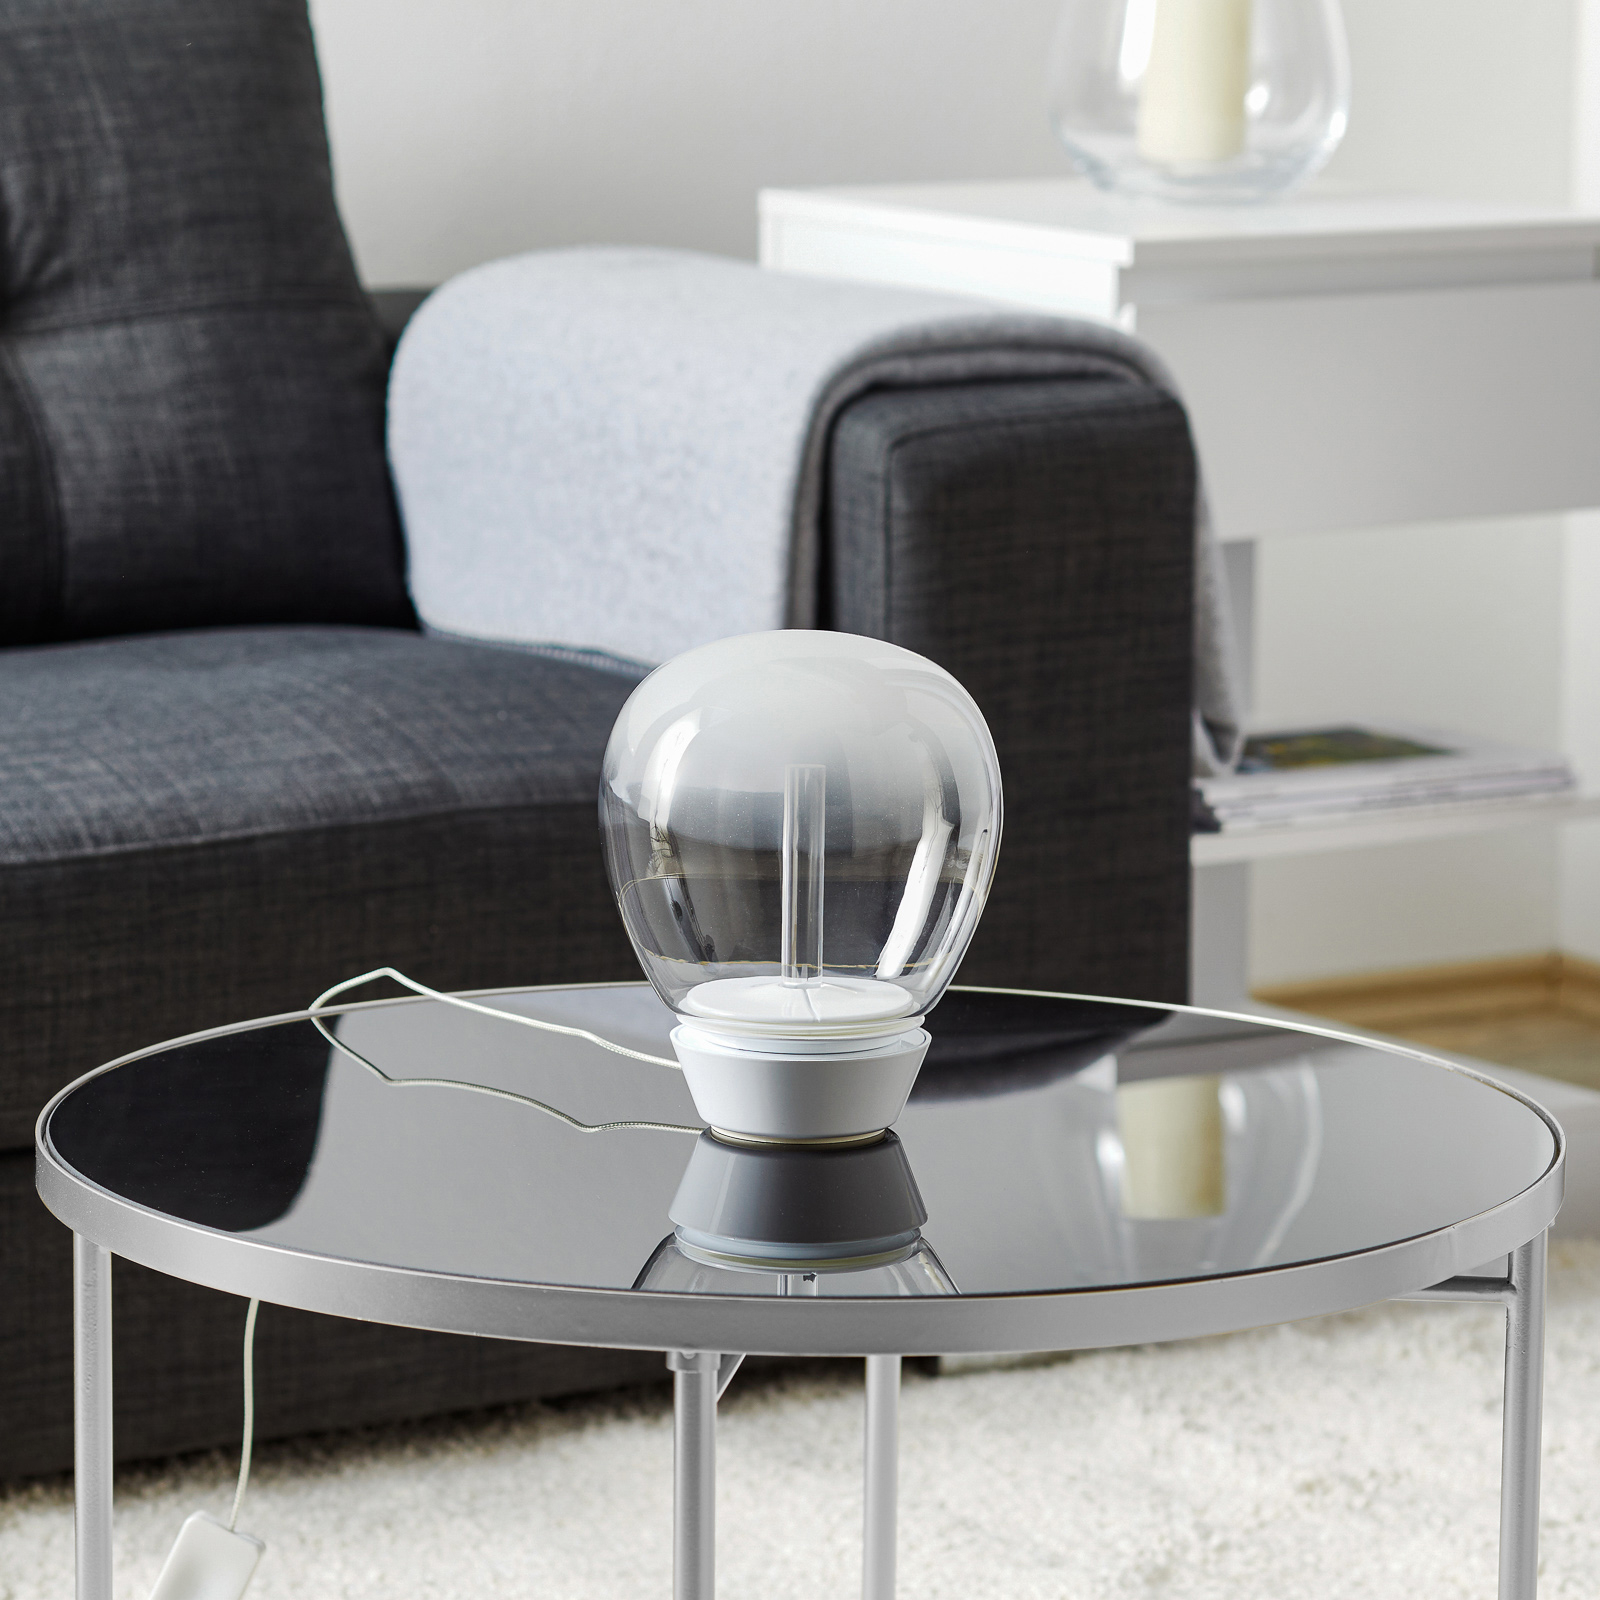 Designerska lampa stołowa LED Empatia, 16 cm